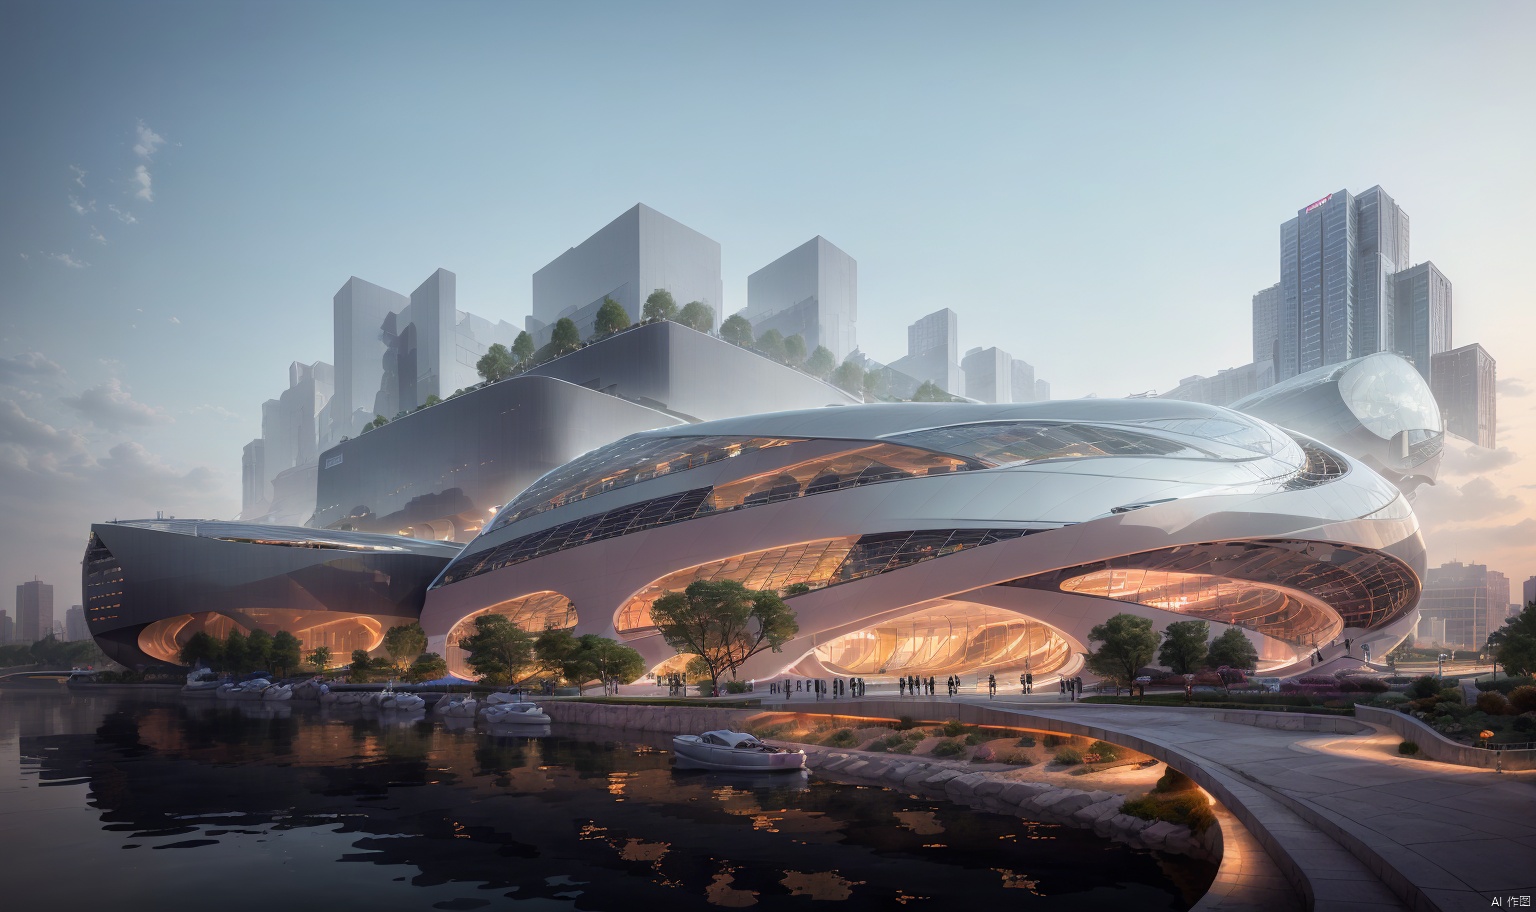  River view, urban, Futuristic, Technological, MIR, modern architecture, ecology
, Landscape,Alien Exhibition Hall